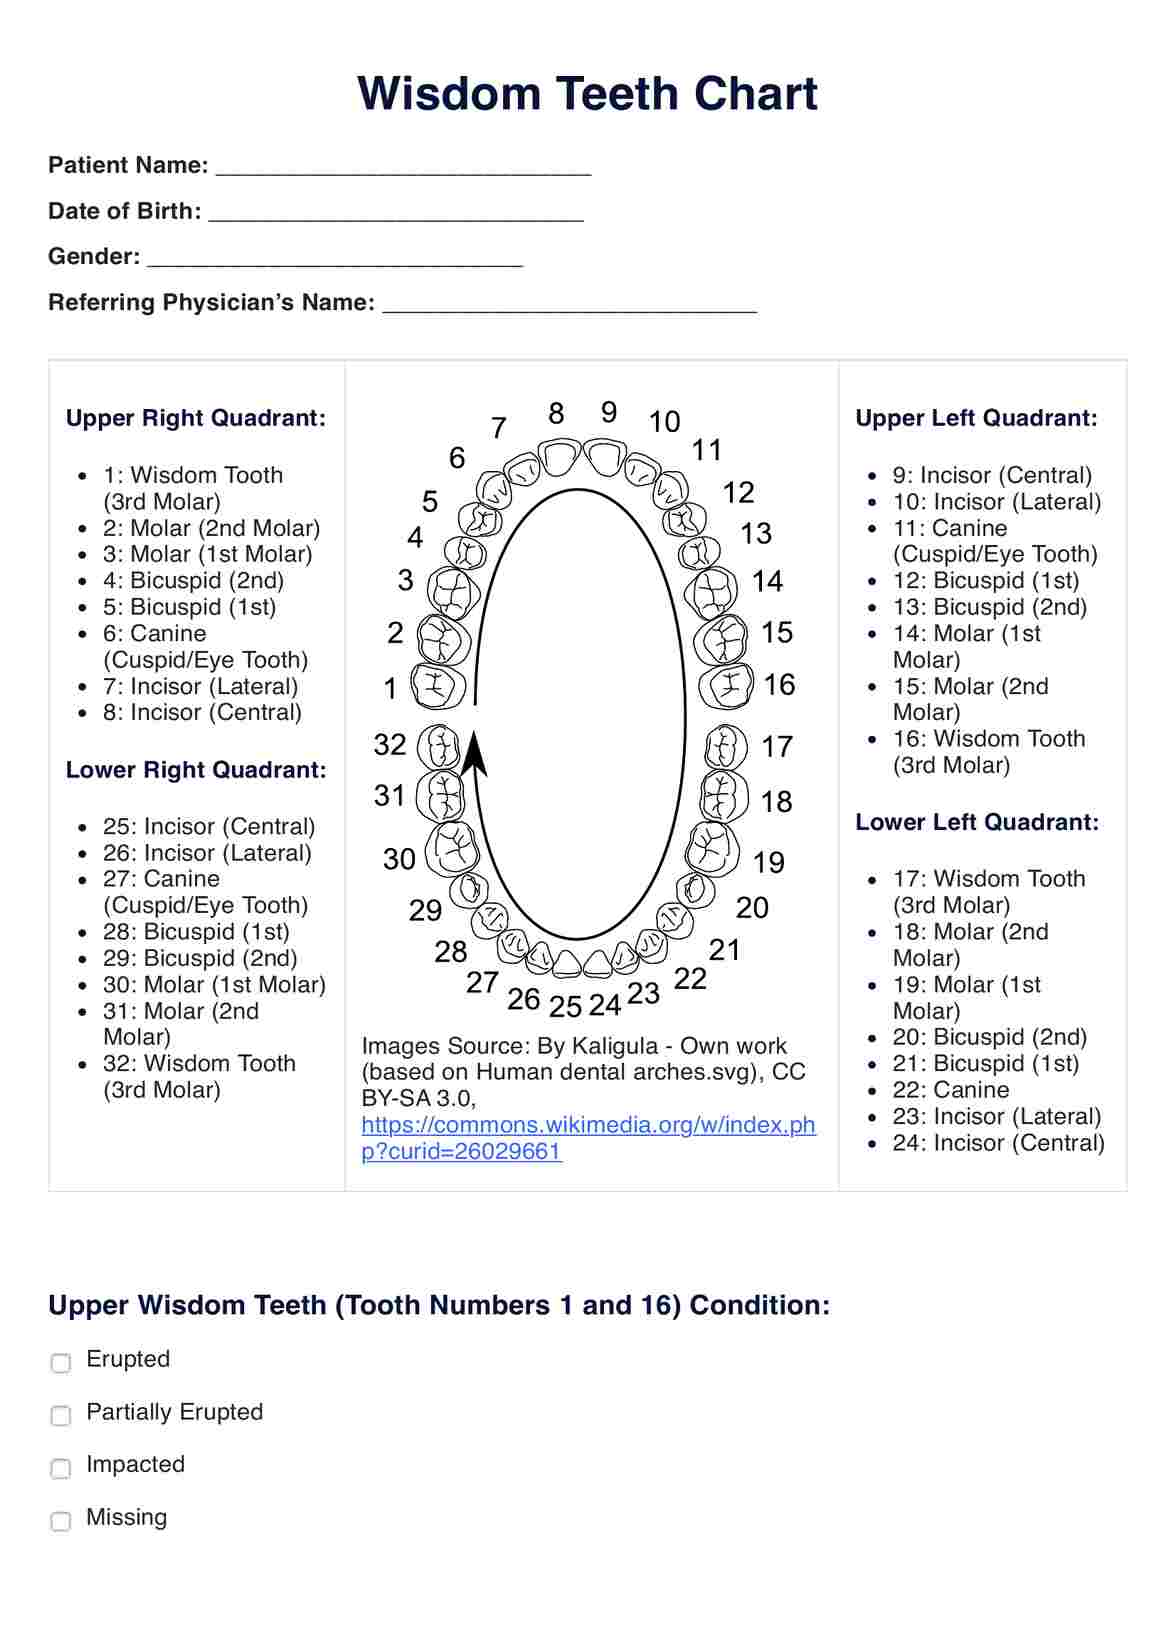 Wisdom Teeth Chart PDF Example